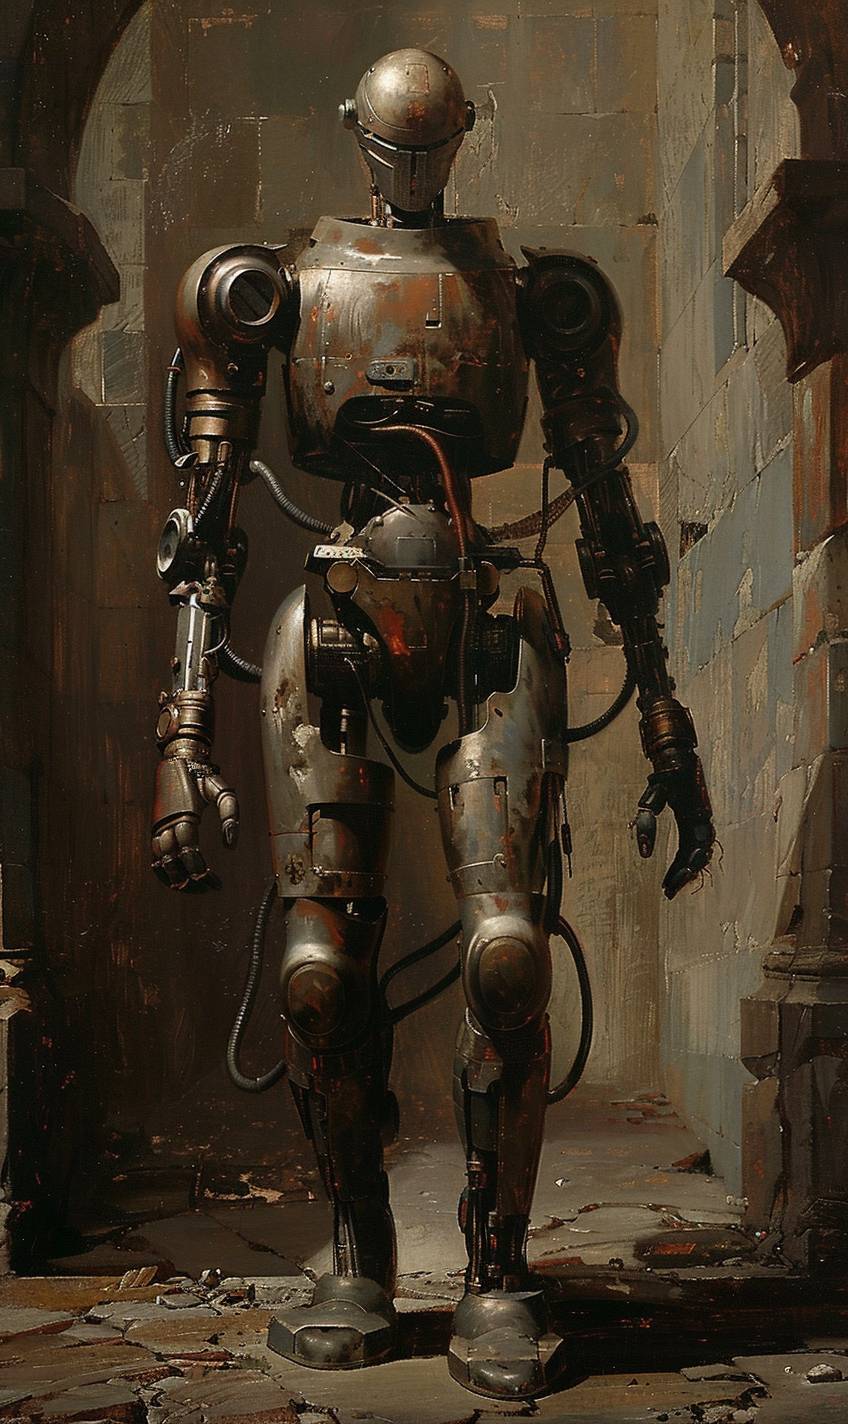 Raphael's painting depicting a robot